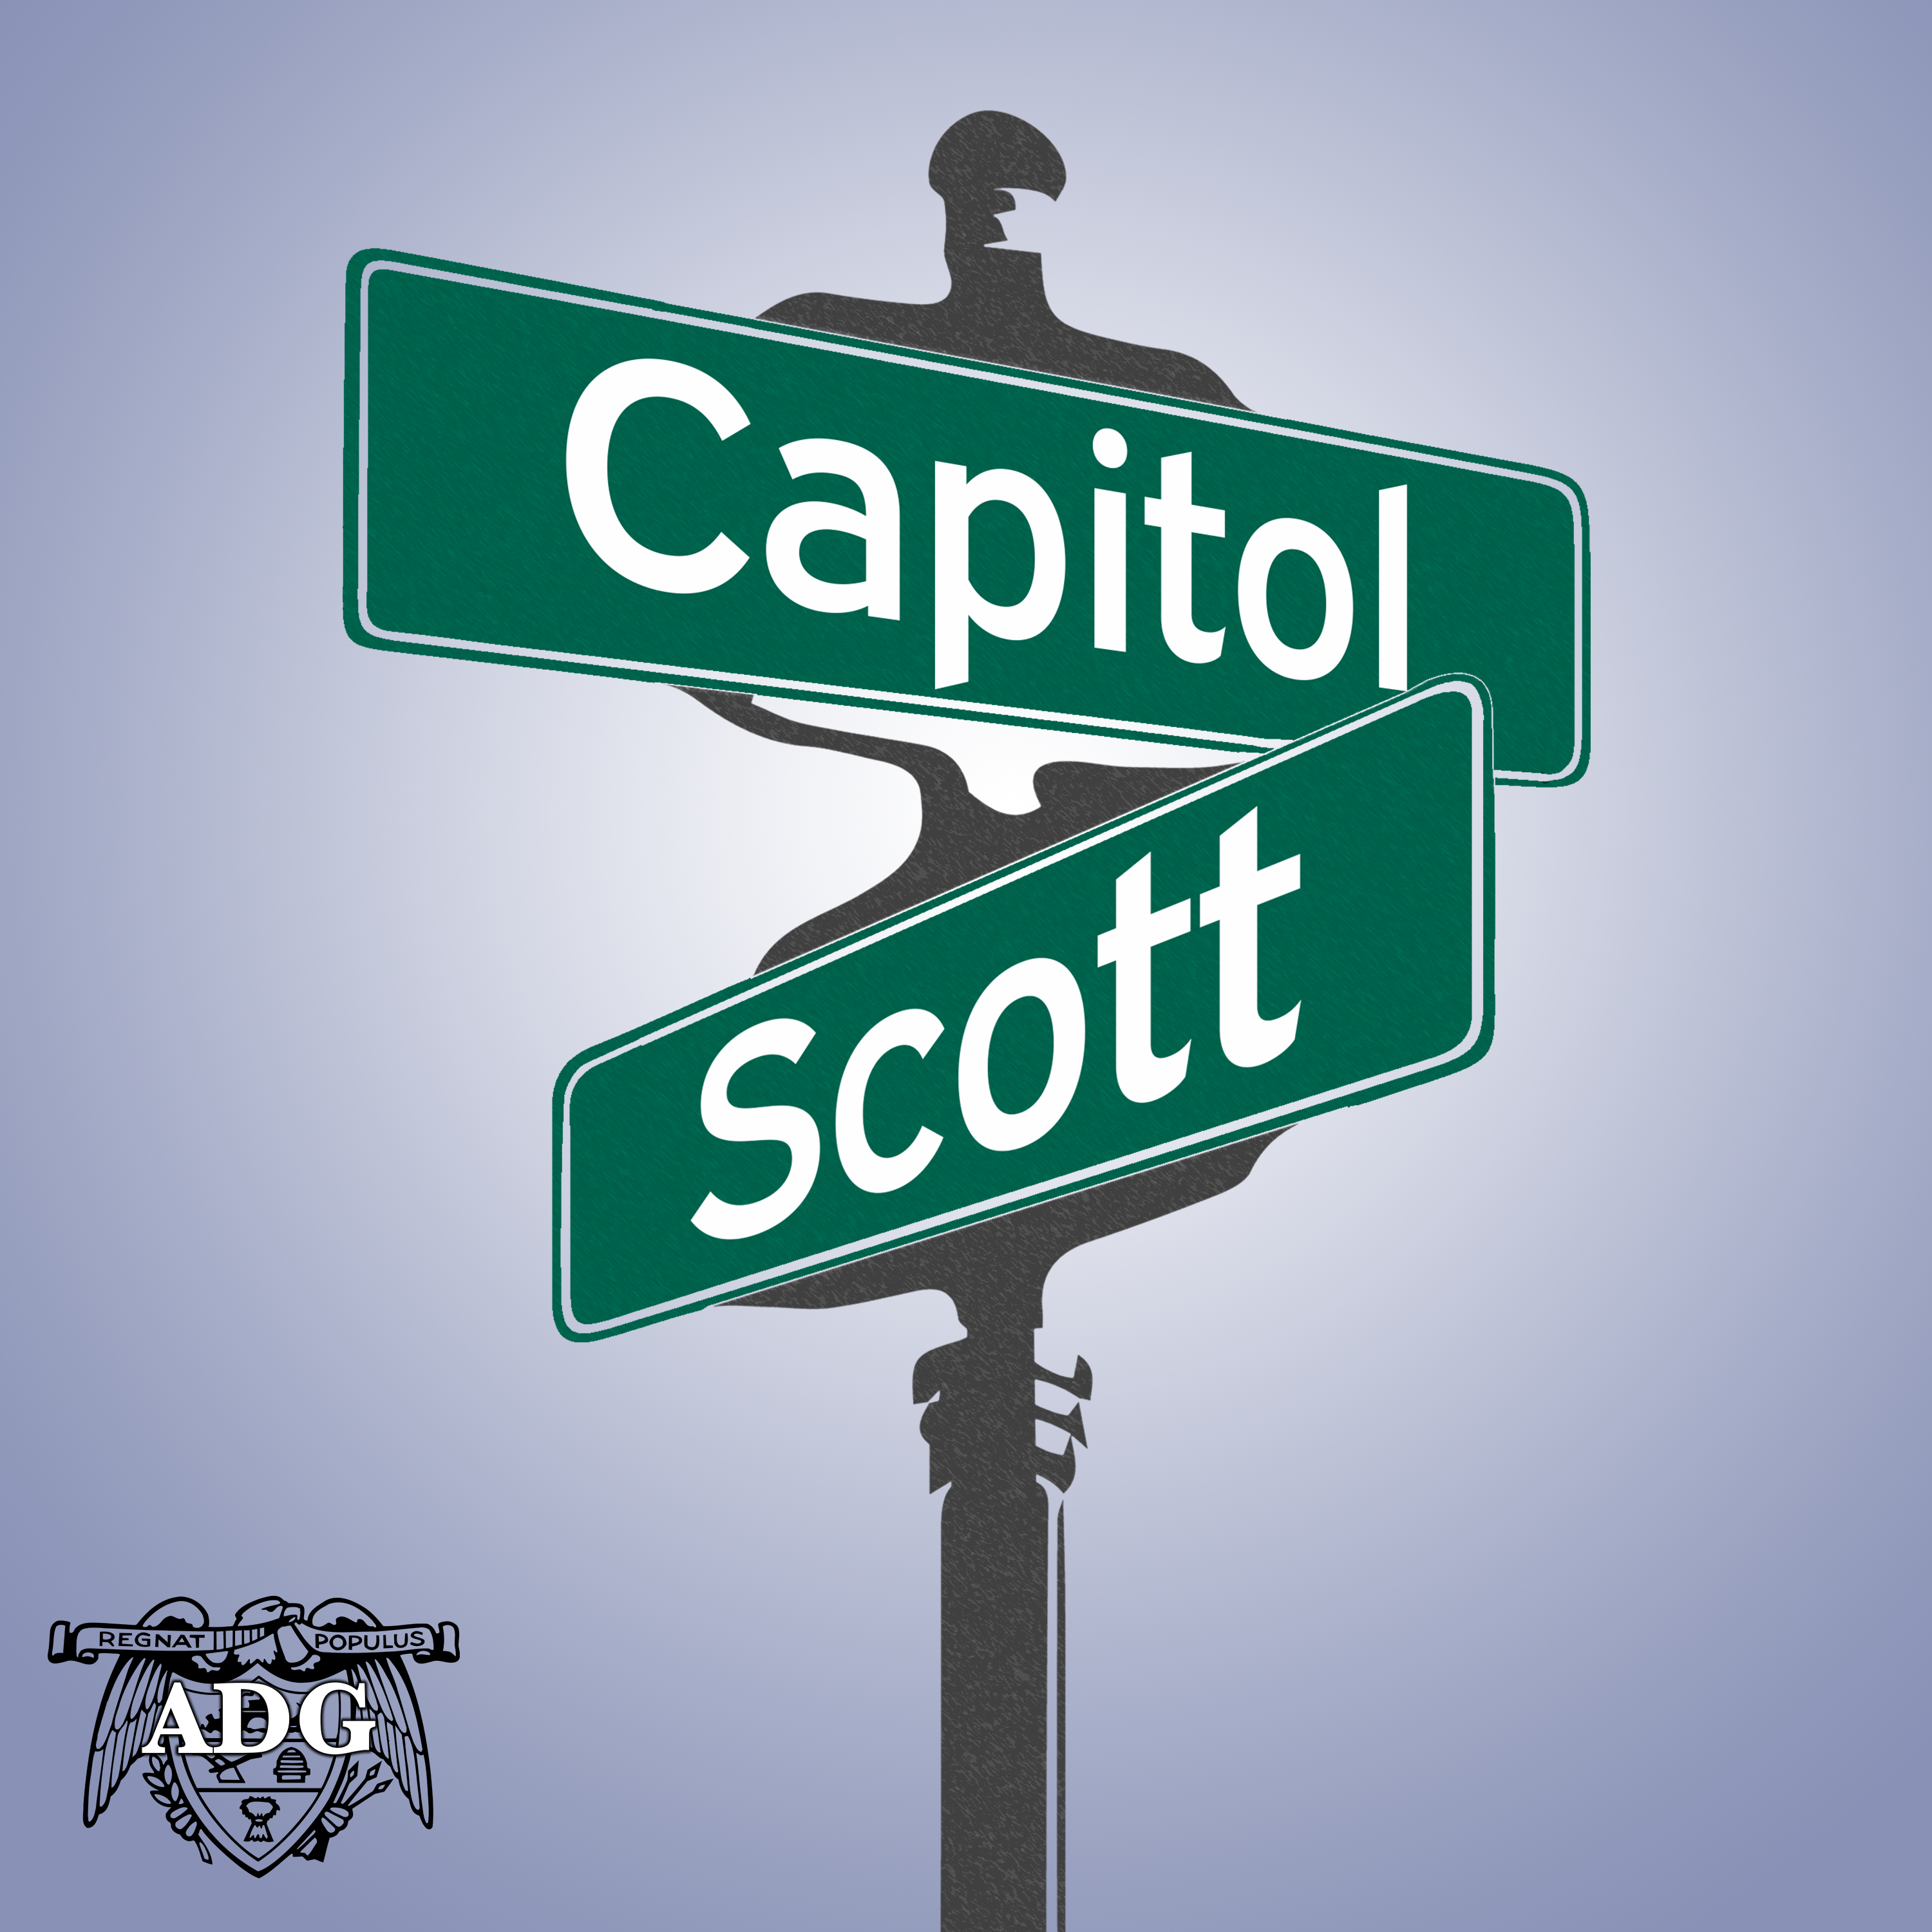 Capitol & Scott: The Methodist divide